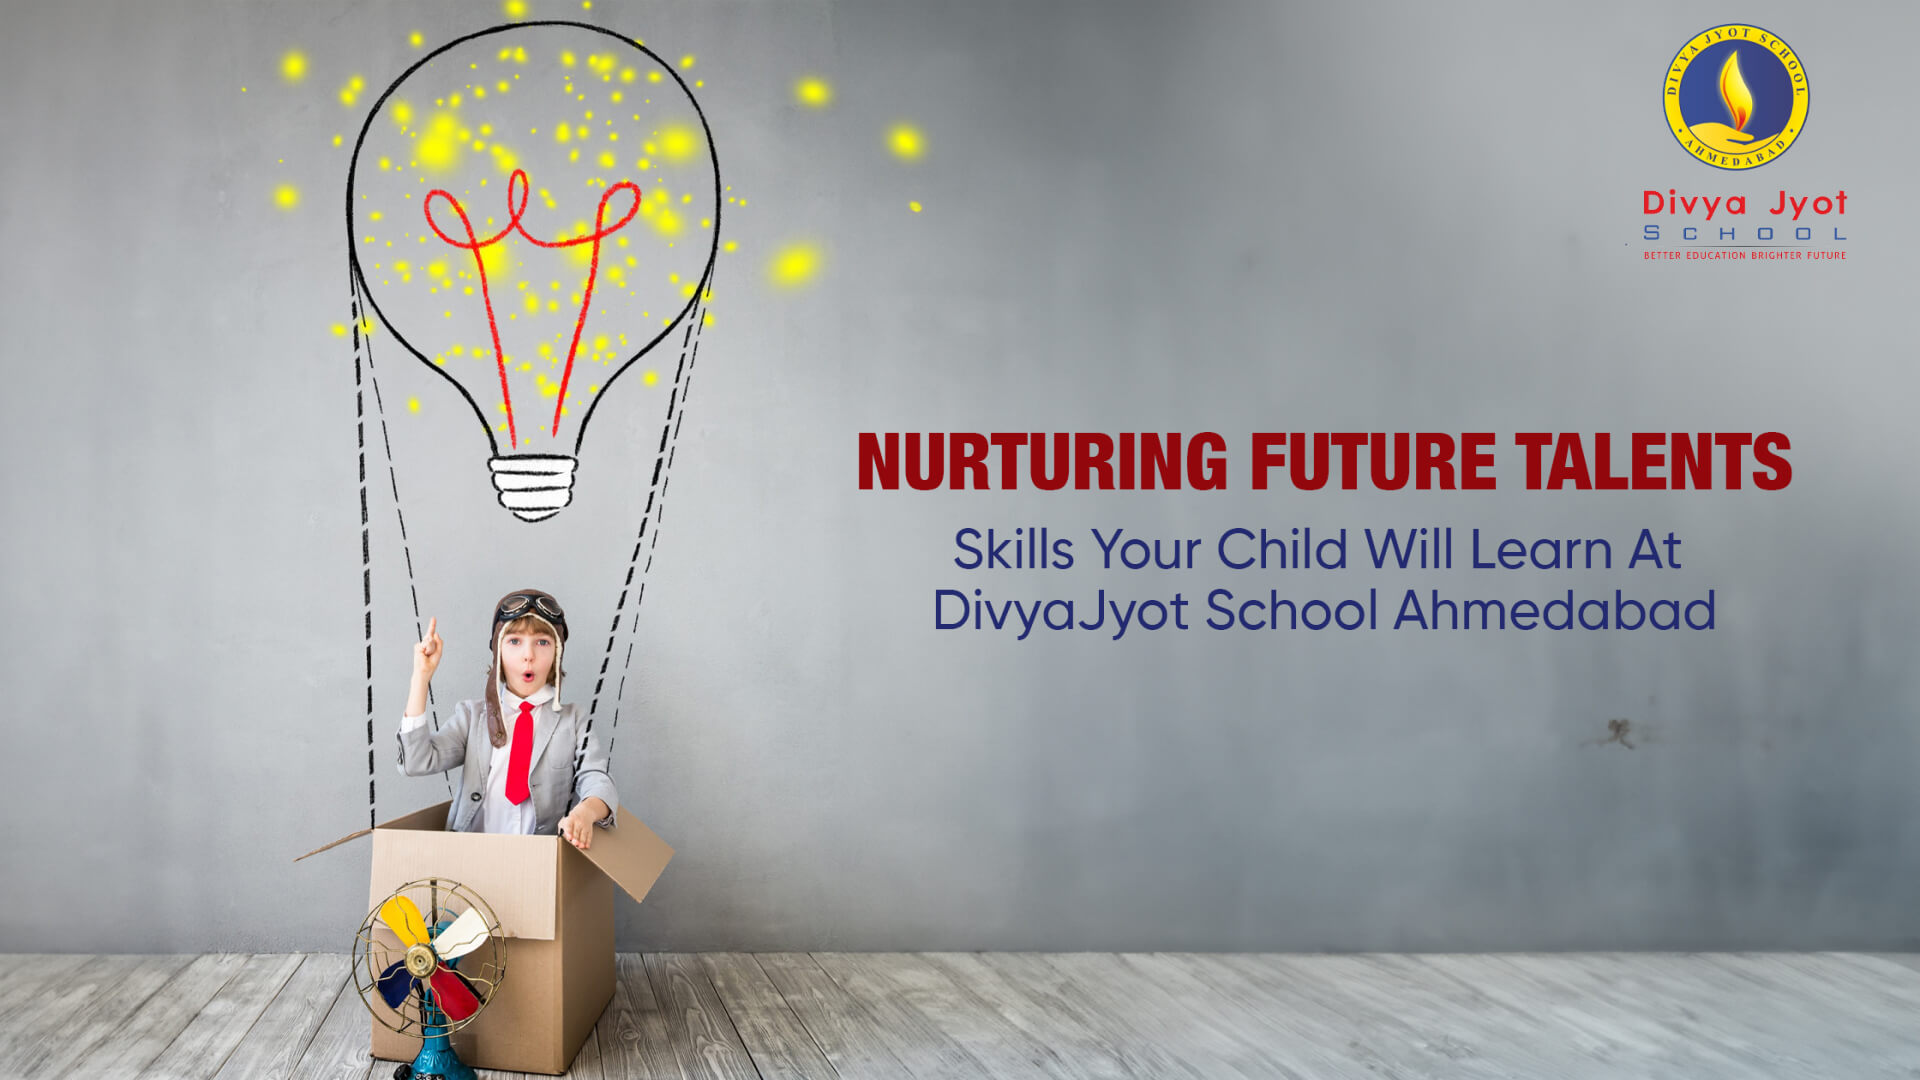 Nurturing Future Talents: Skills Your Child Will Learn At DivyaJyot School Ahmedabad